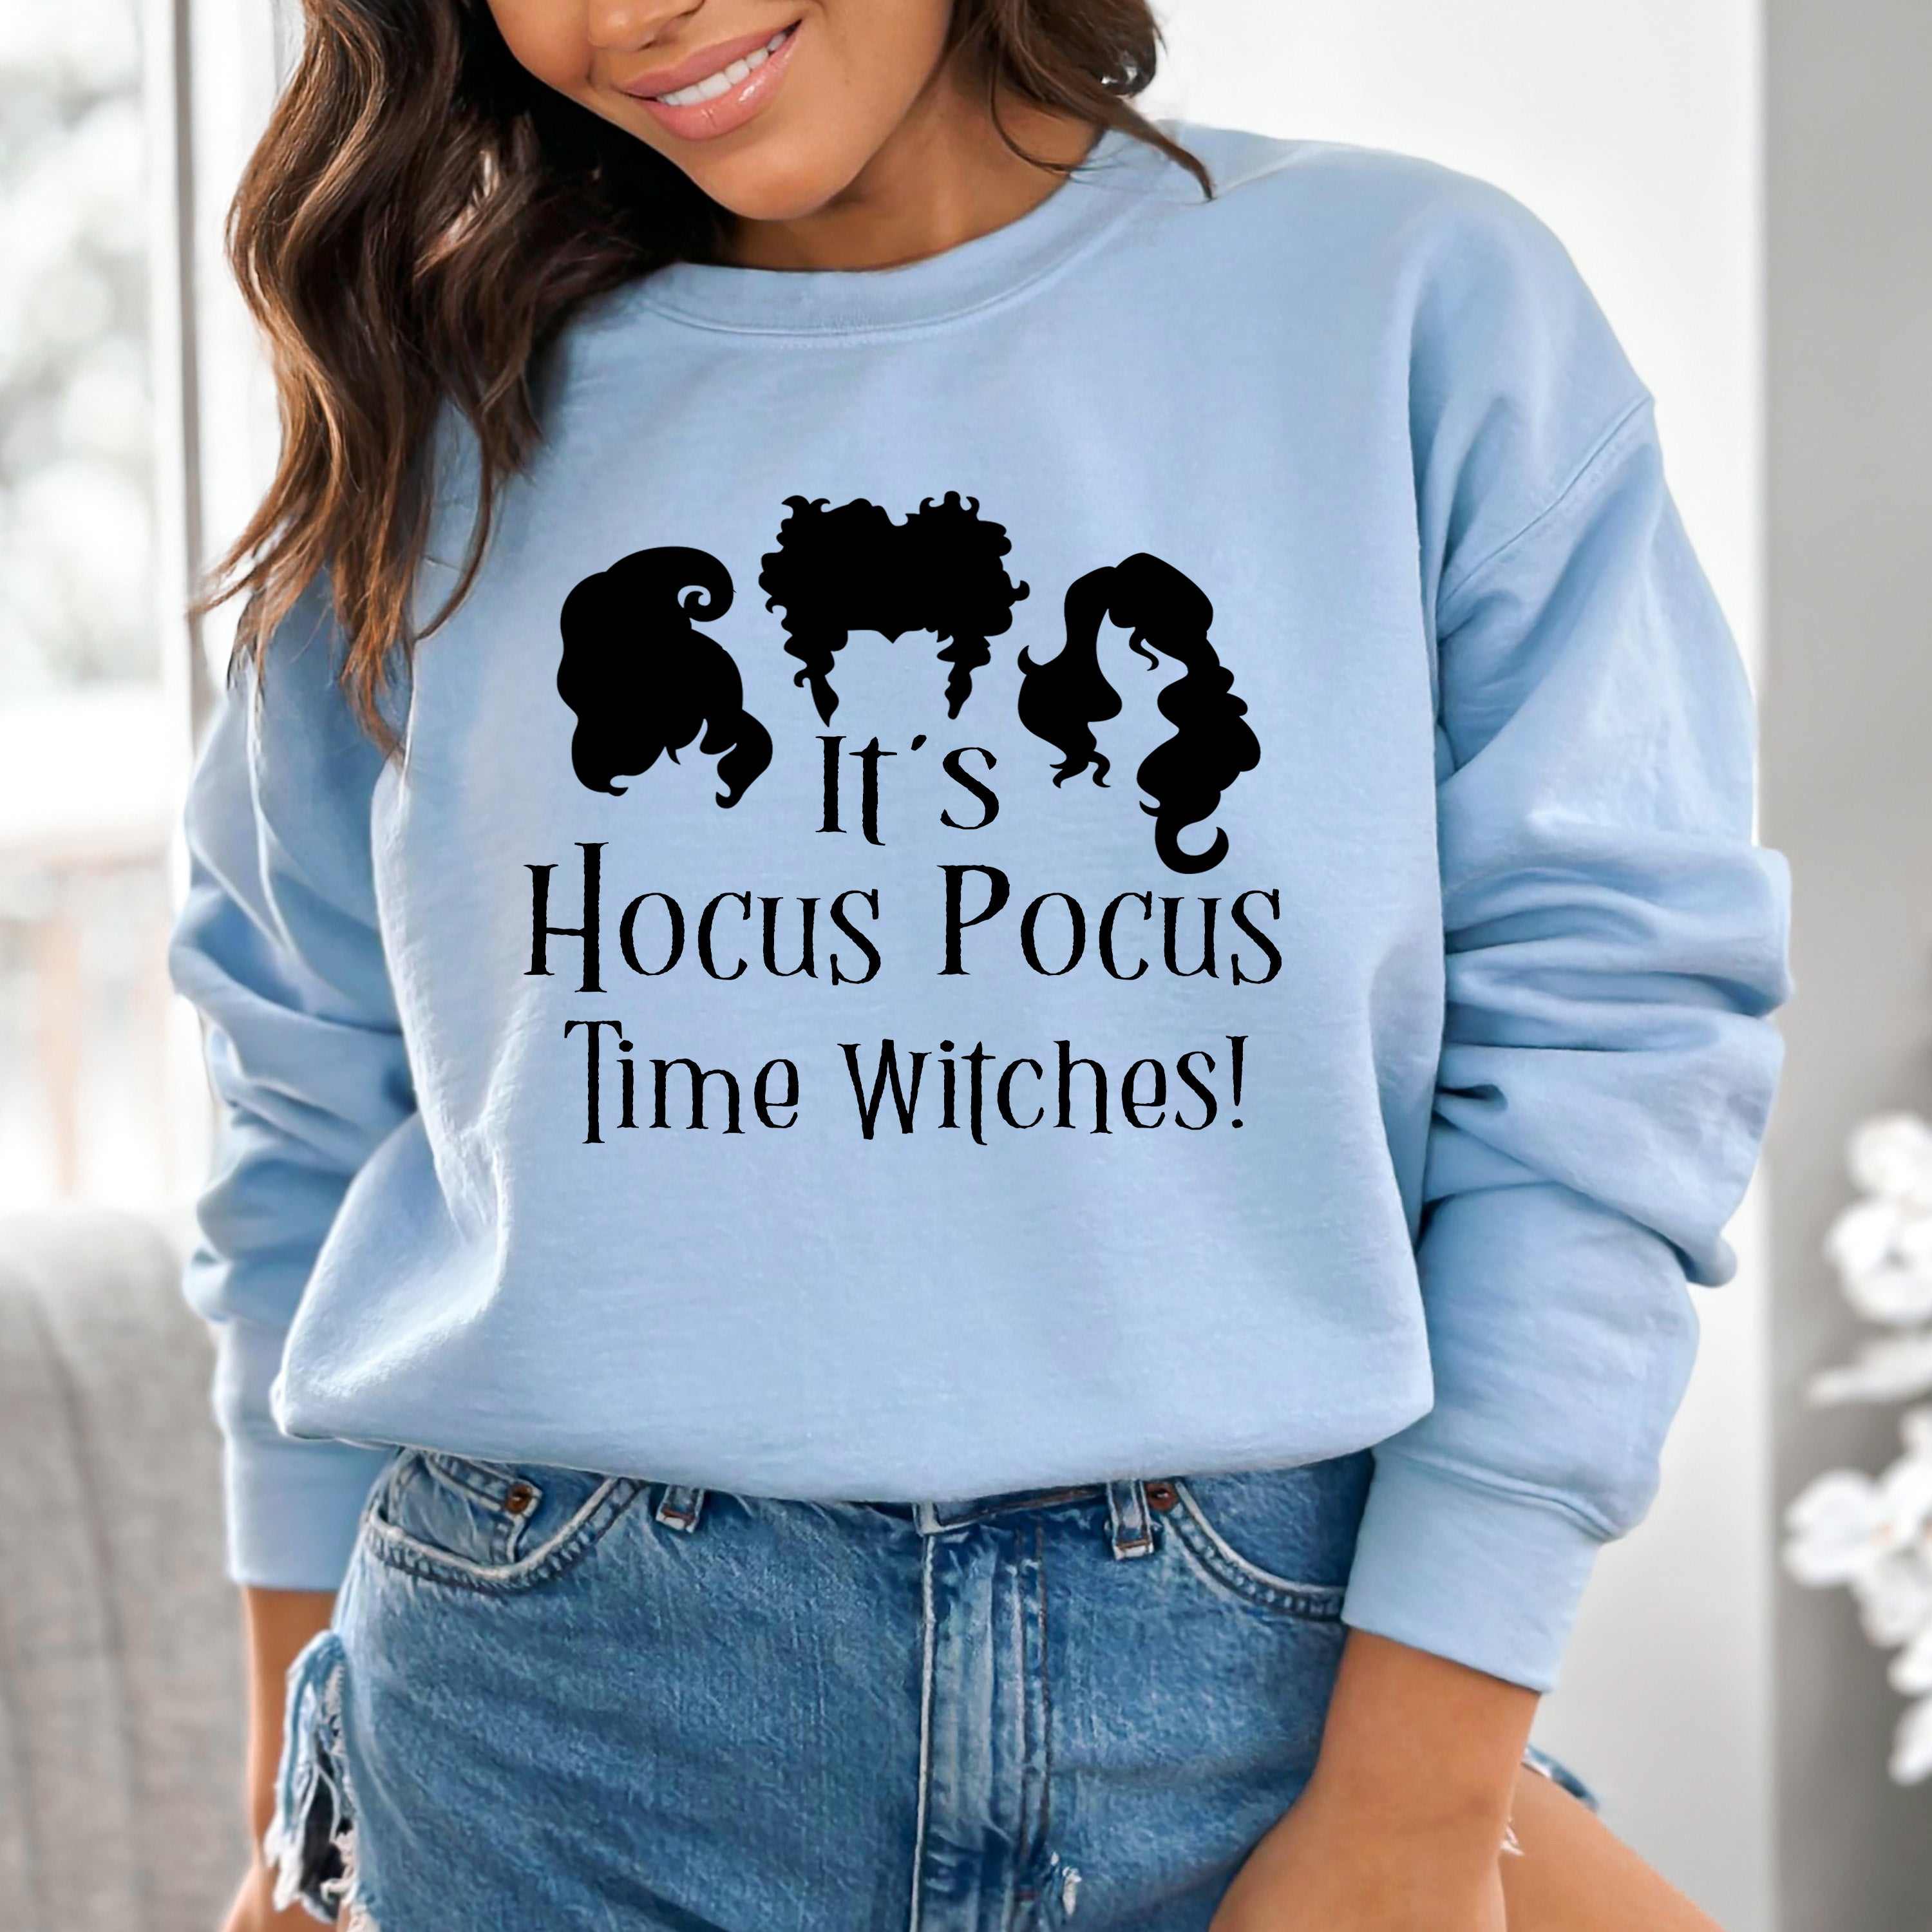 IT'S HOCUS POCUS TIME WITCHES - Hoodie & Sweatshirt.